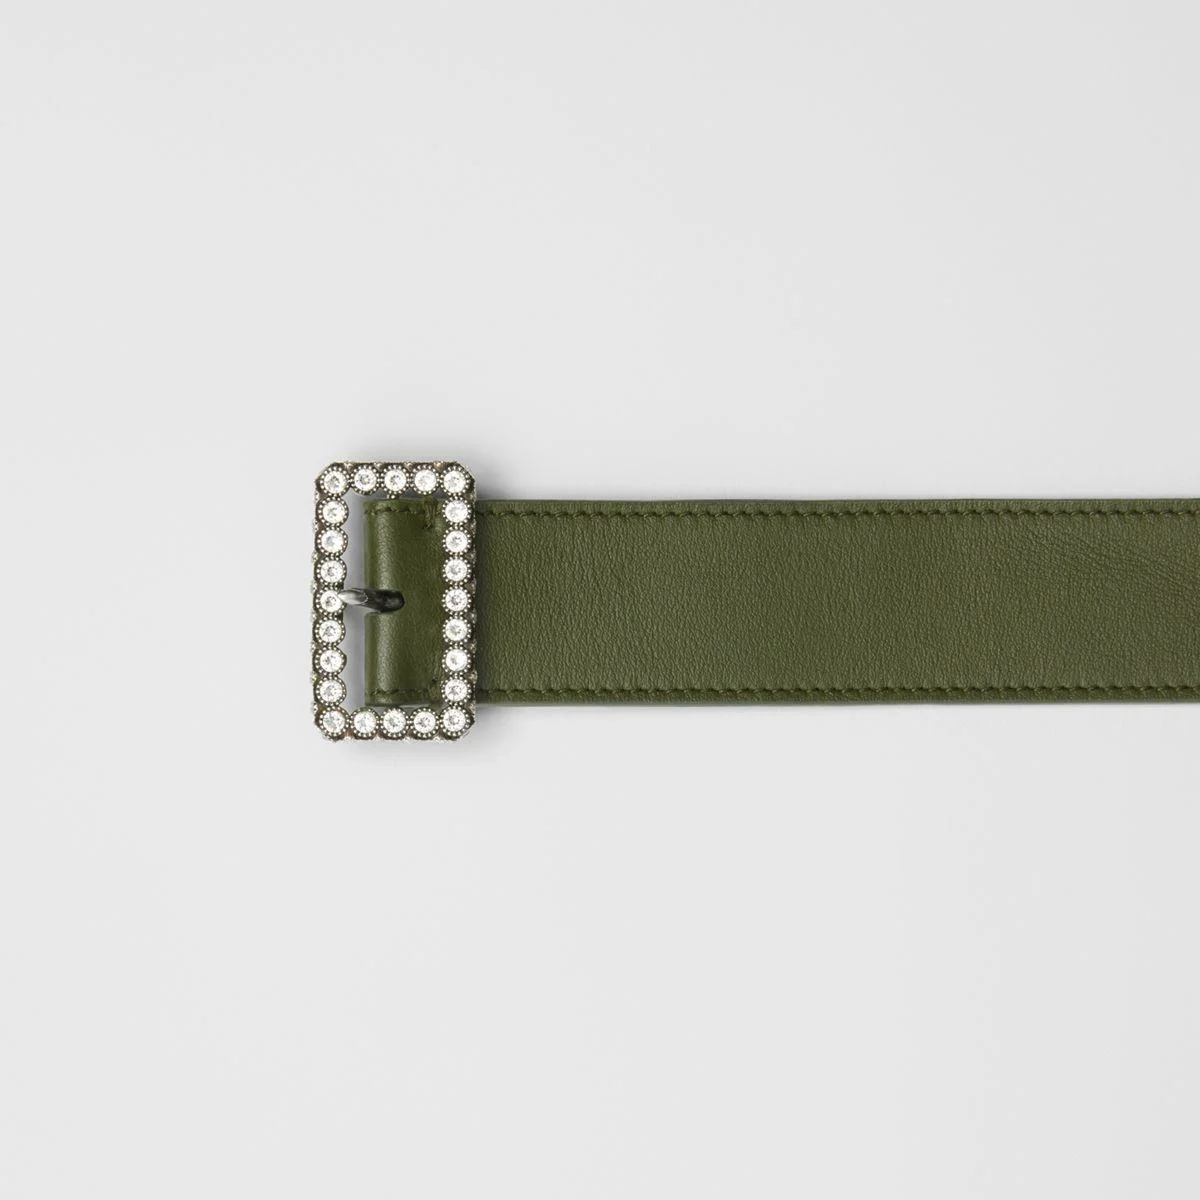 Burberry Crystal Buckle Leather Belt